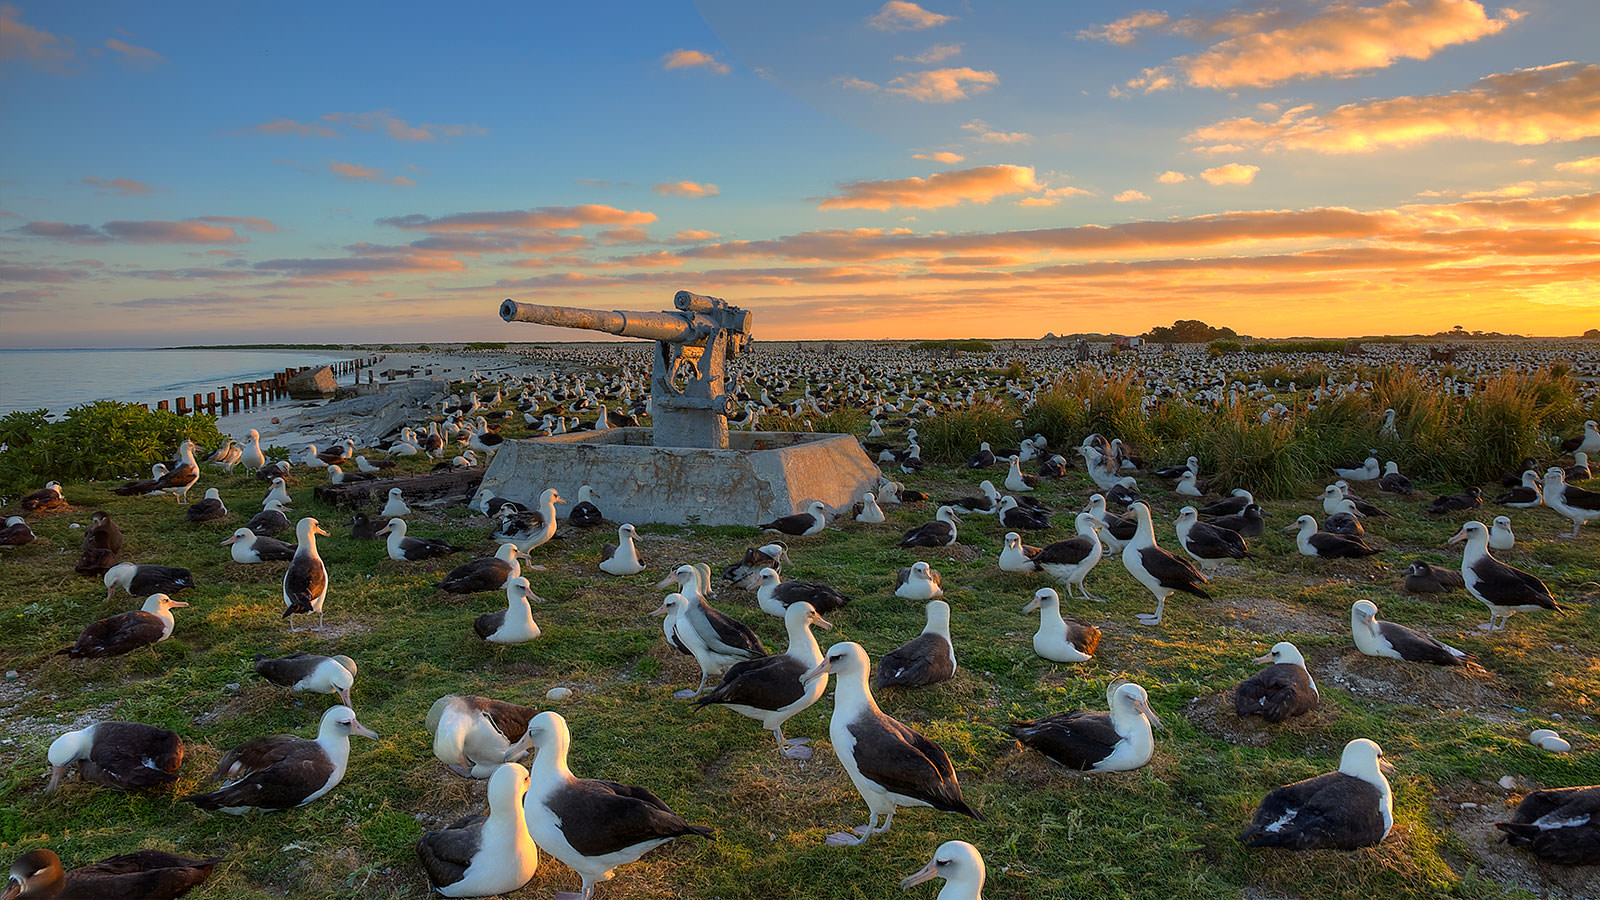 Albatross at sunrise near a statue